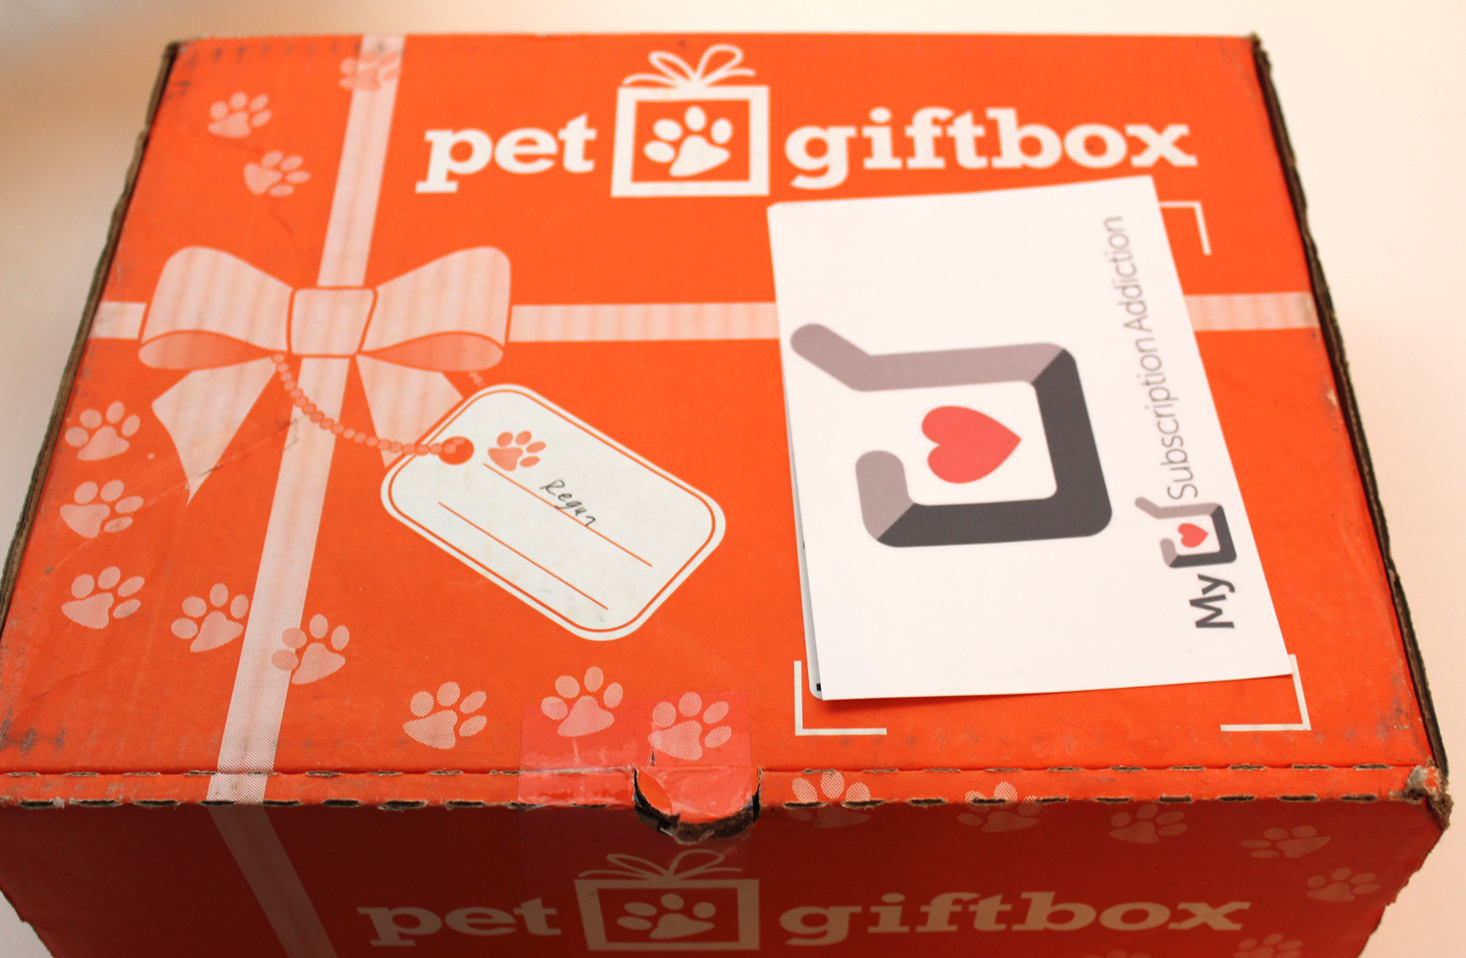 pet-gift-box-cat-january-2017-box